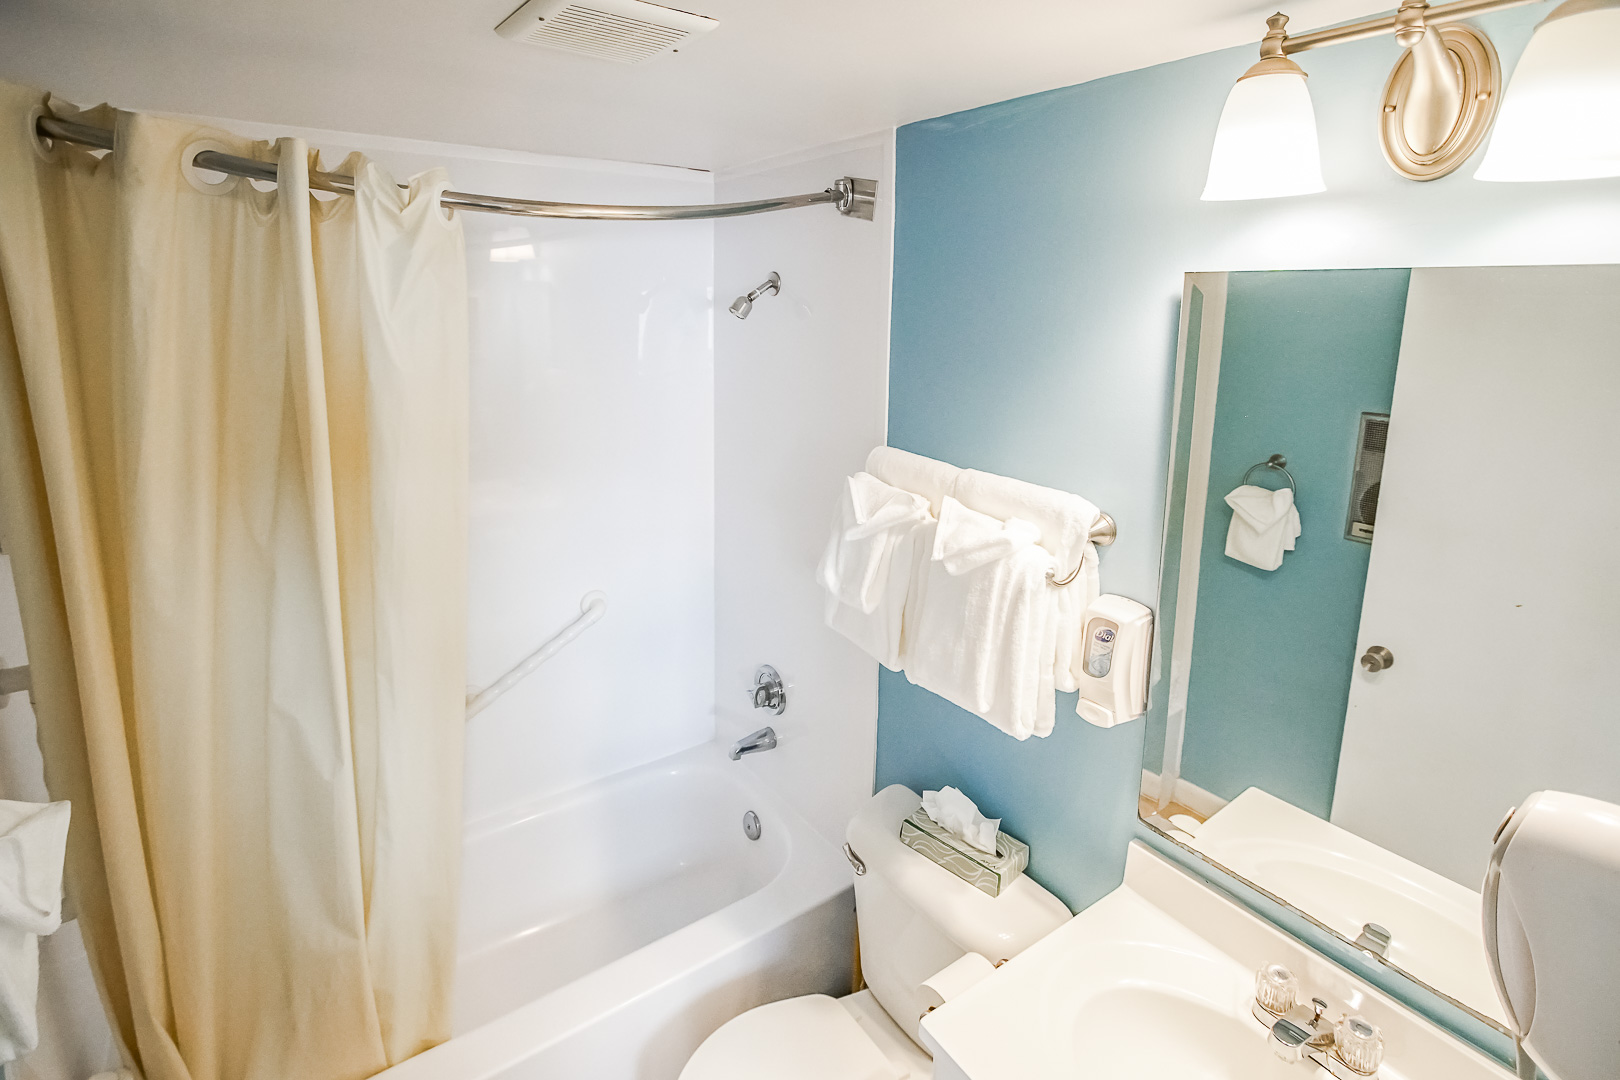 A clean bathroom view at VRI's Seawinds II Resort in Massachusetts.